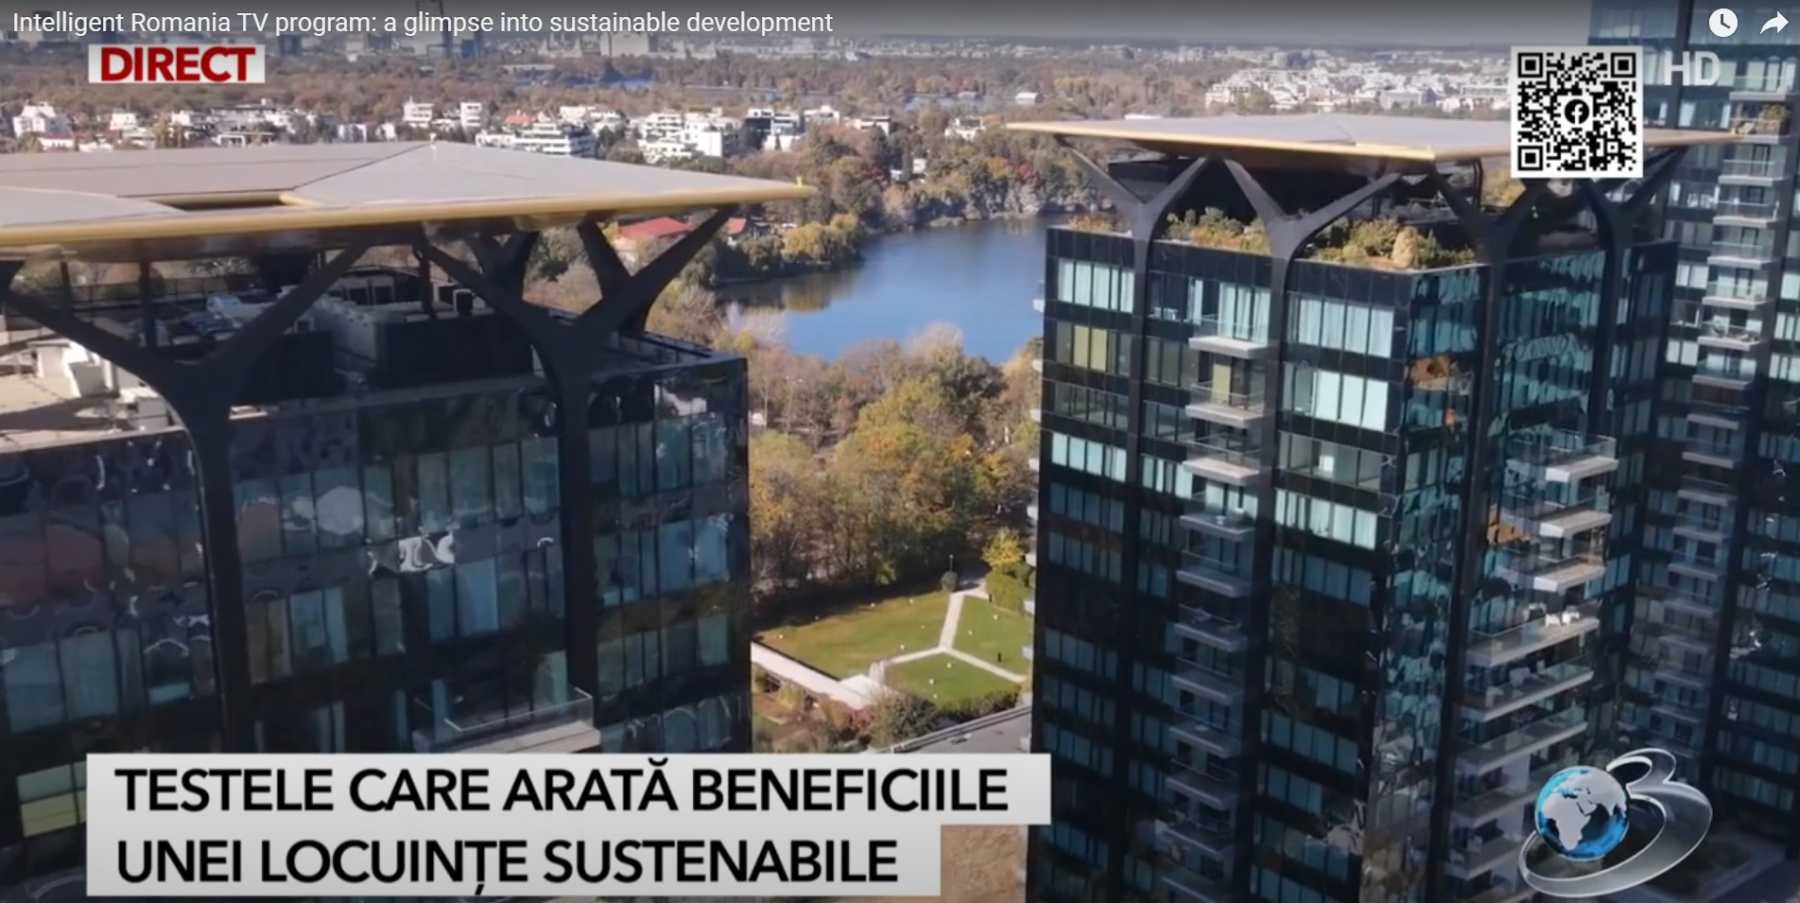 One United Properties showcased on Intelligent Romania TV program: a glimpse into sustainable development